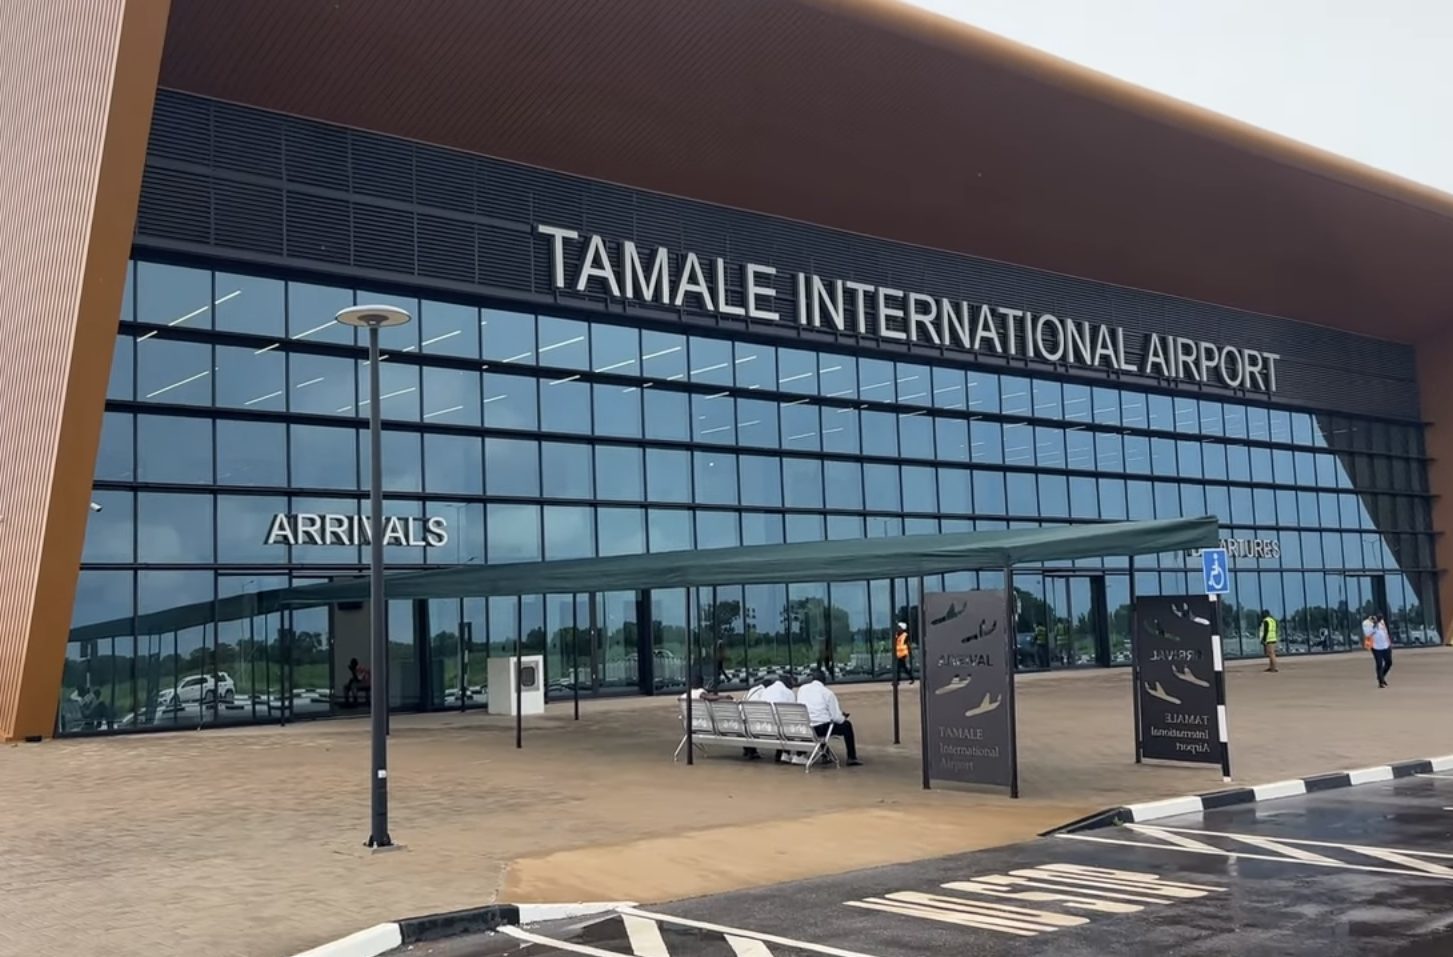 Tamale International Airport in Ghana, West Africa